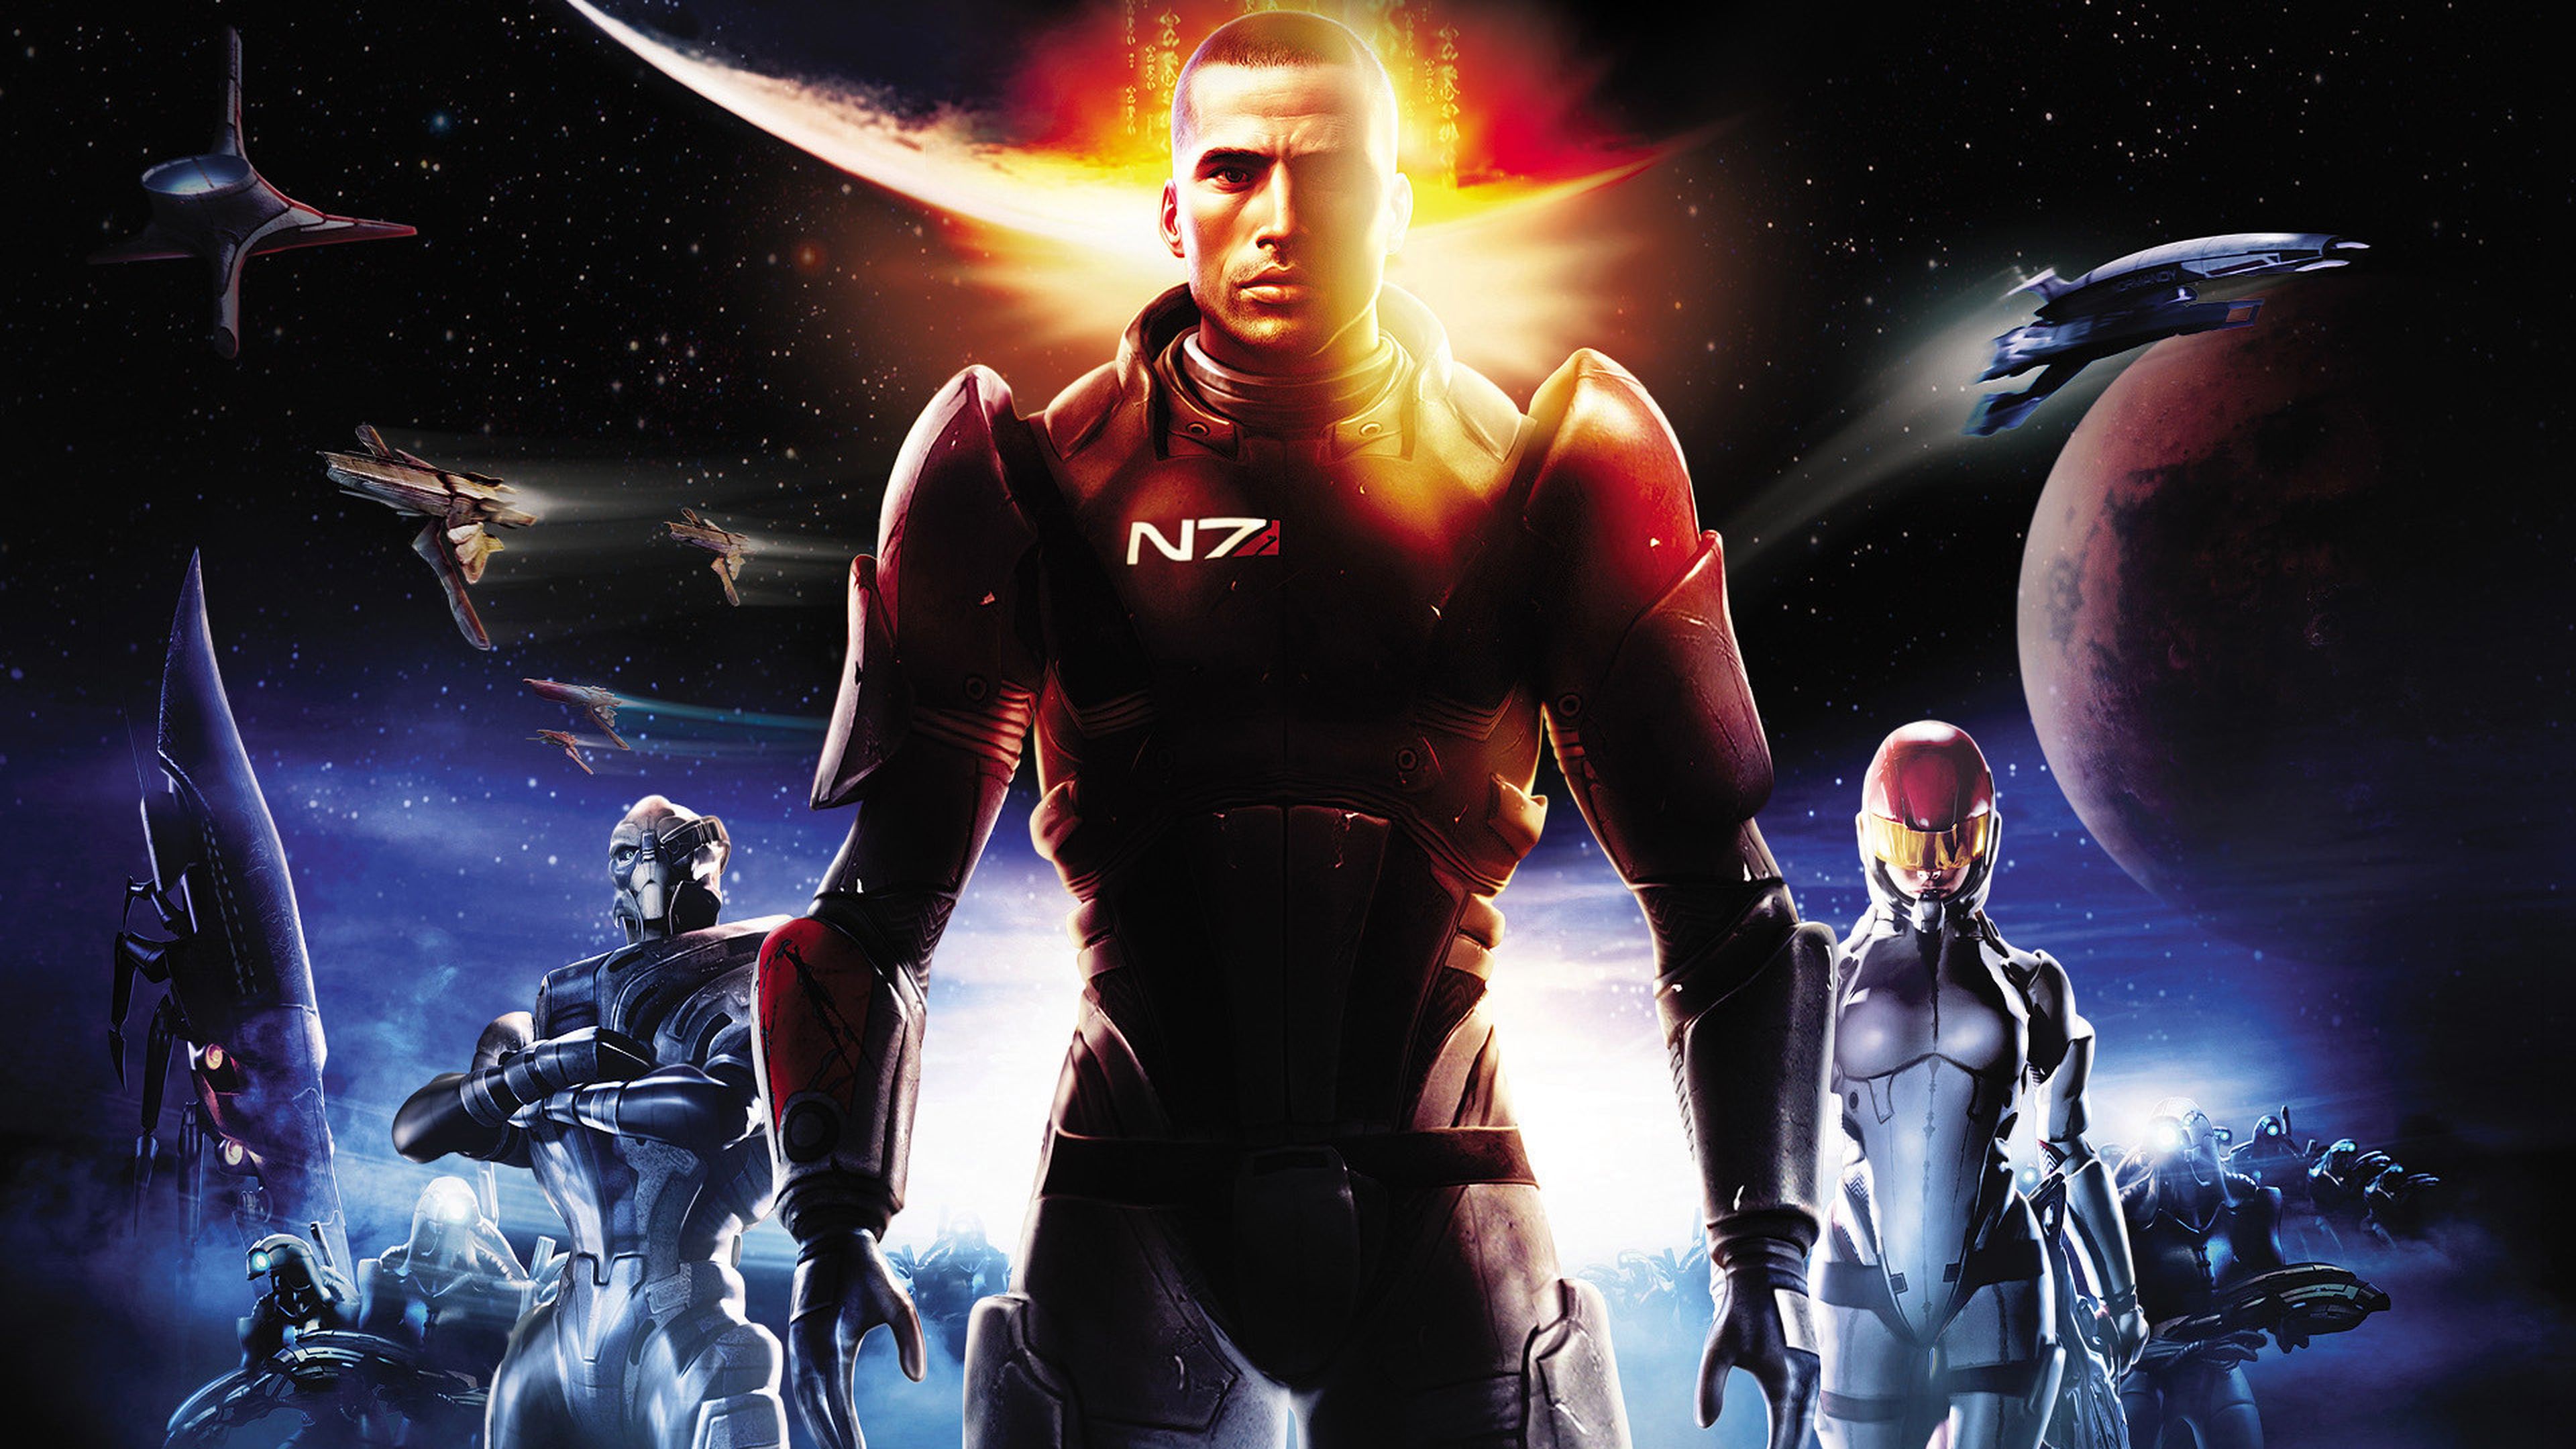 Mass Effect moralidad